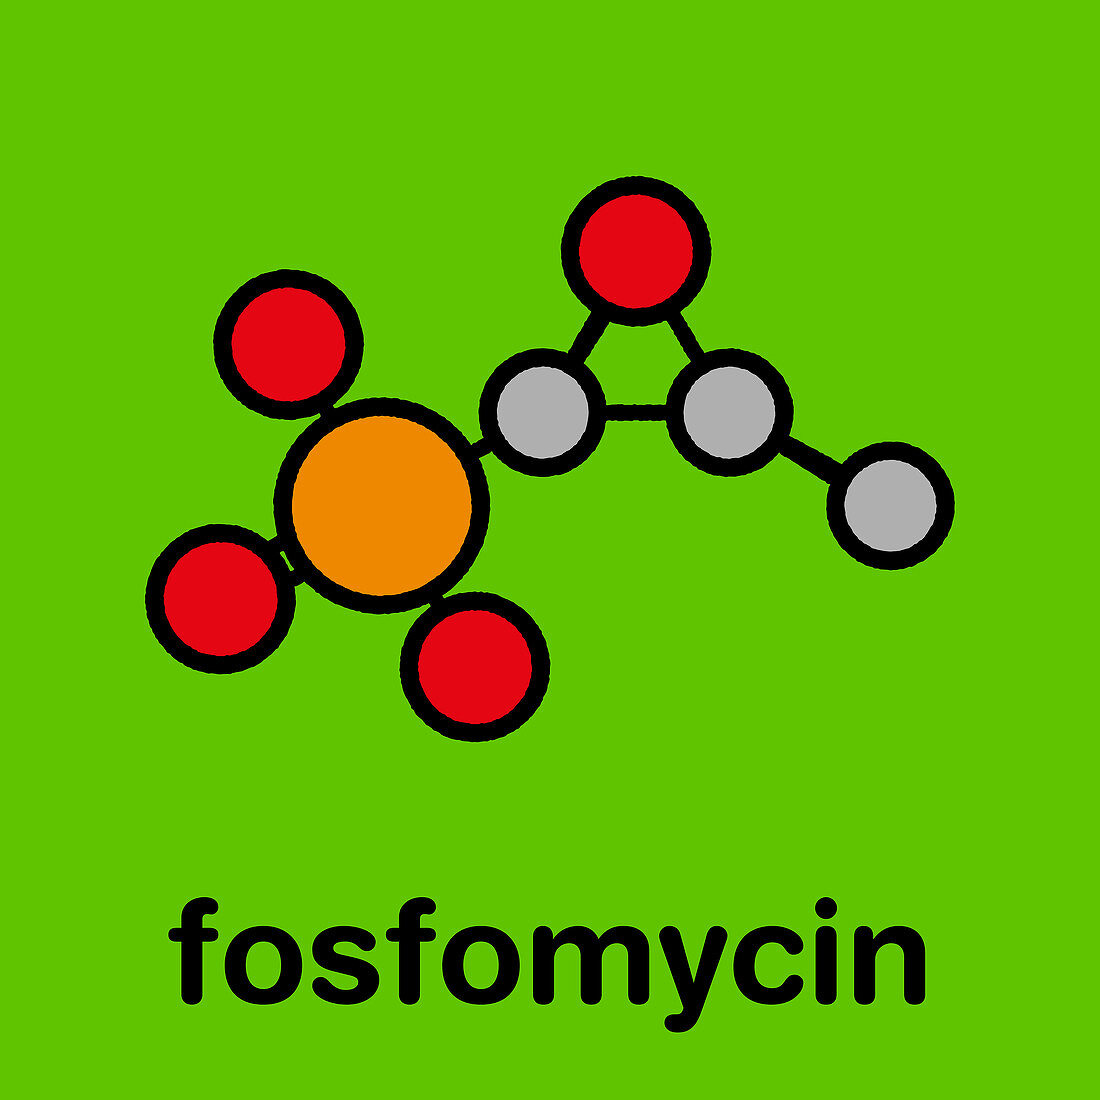 Fosfomycin antibacterial drug, illustration